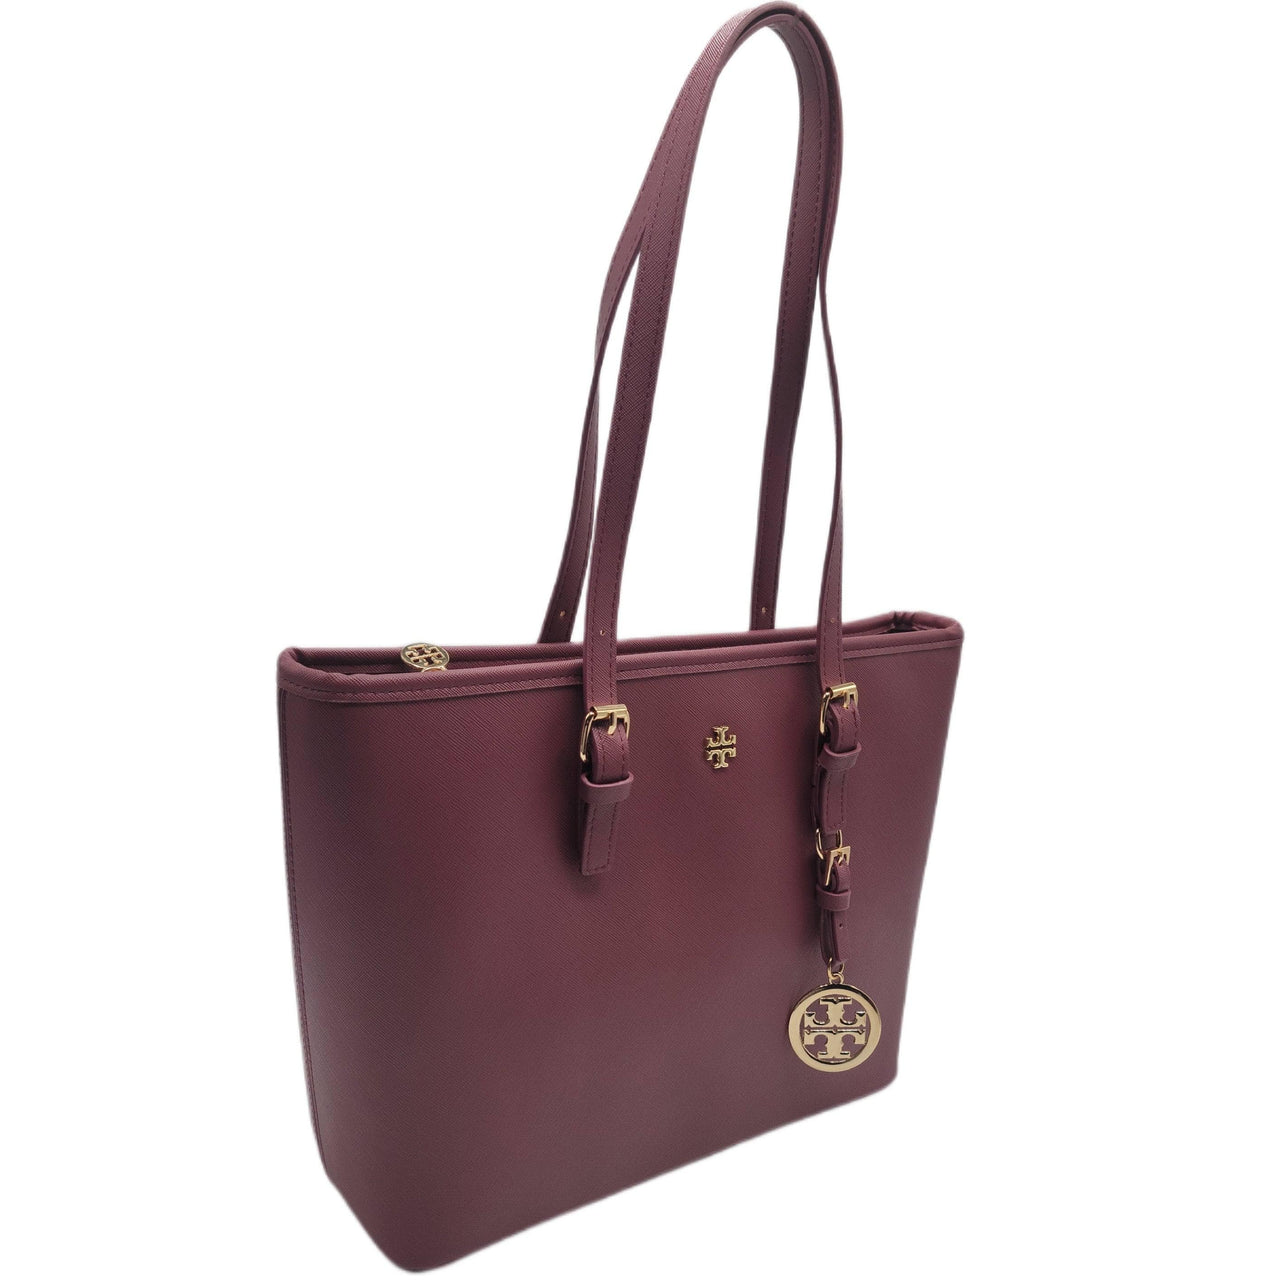 The Bag Couture Handbags, Wallets & Cases Tory Burch Shoulder Bag Maroon